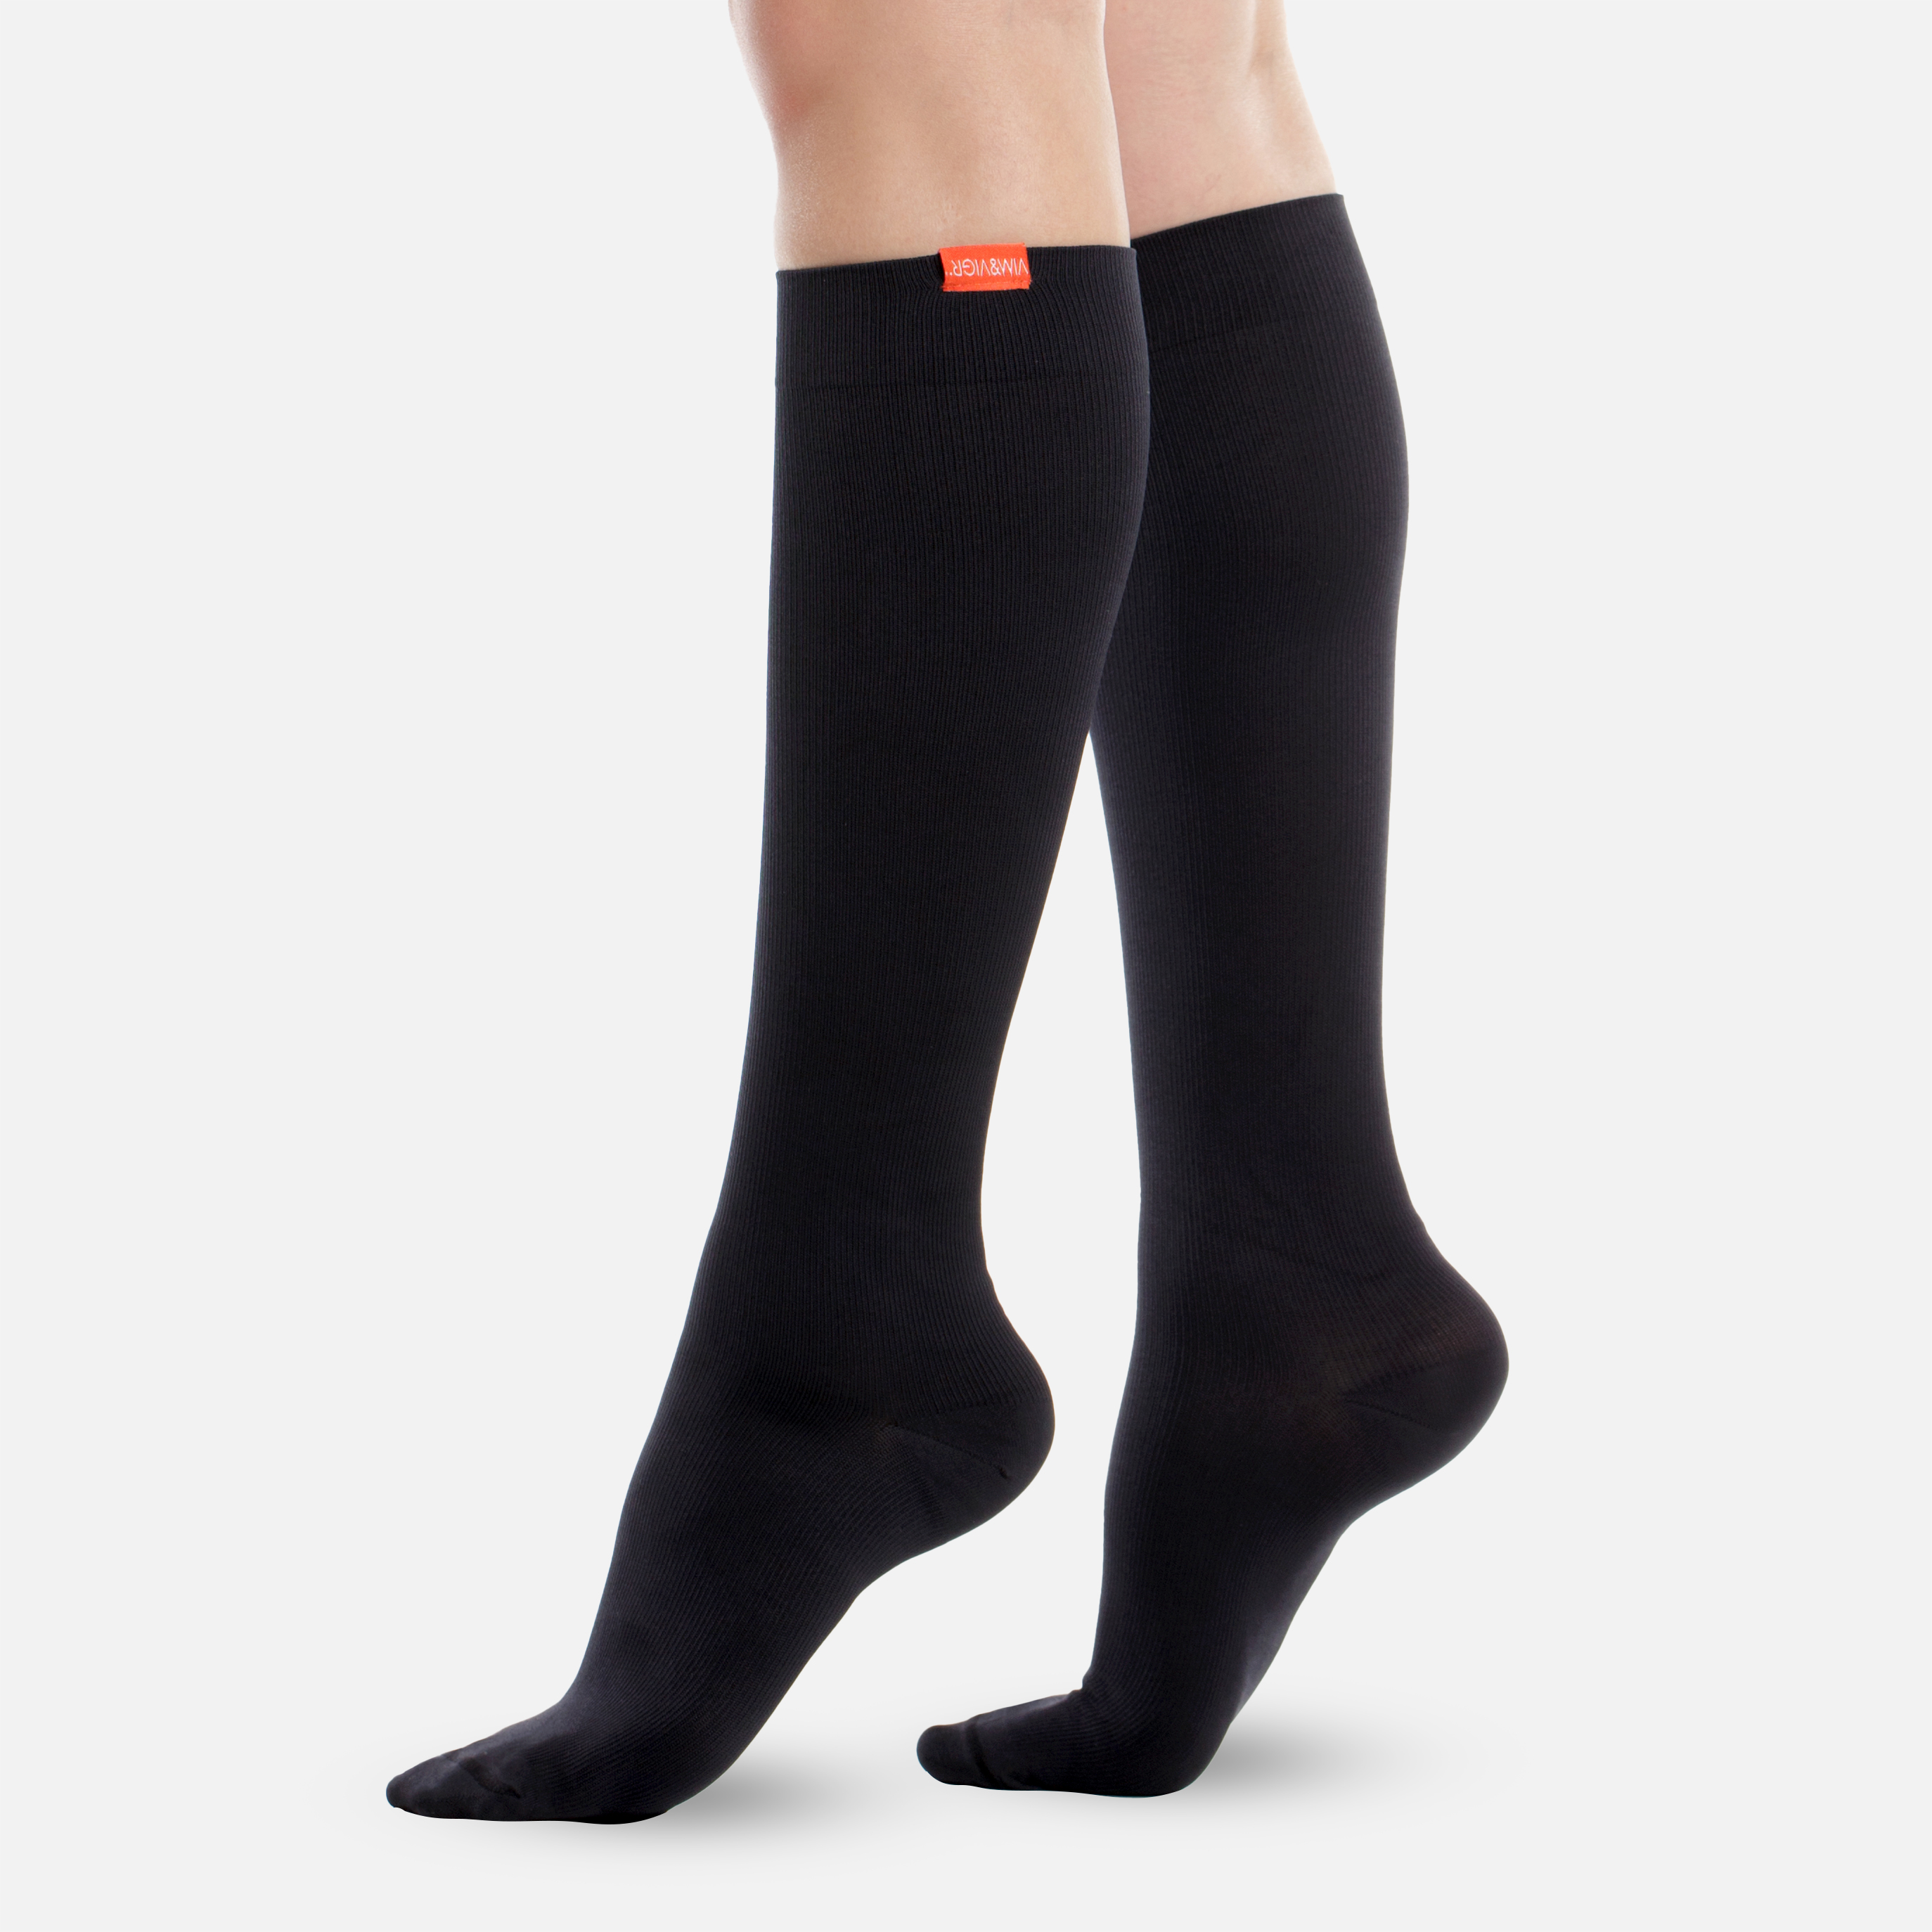 HSA Eligible  VIM & VIGR Moisture-Wick Nylon Socks, Solid Black, Wide  Calf, 30-40 mmHg